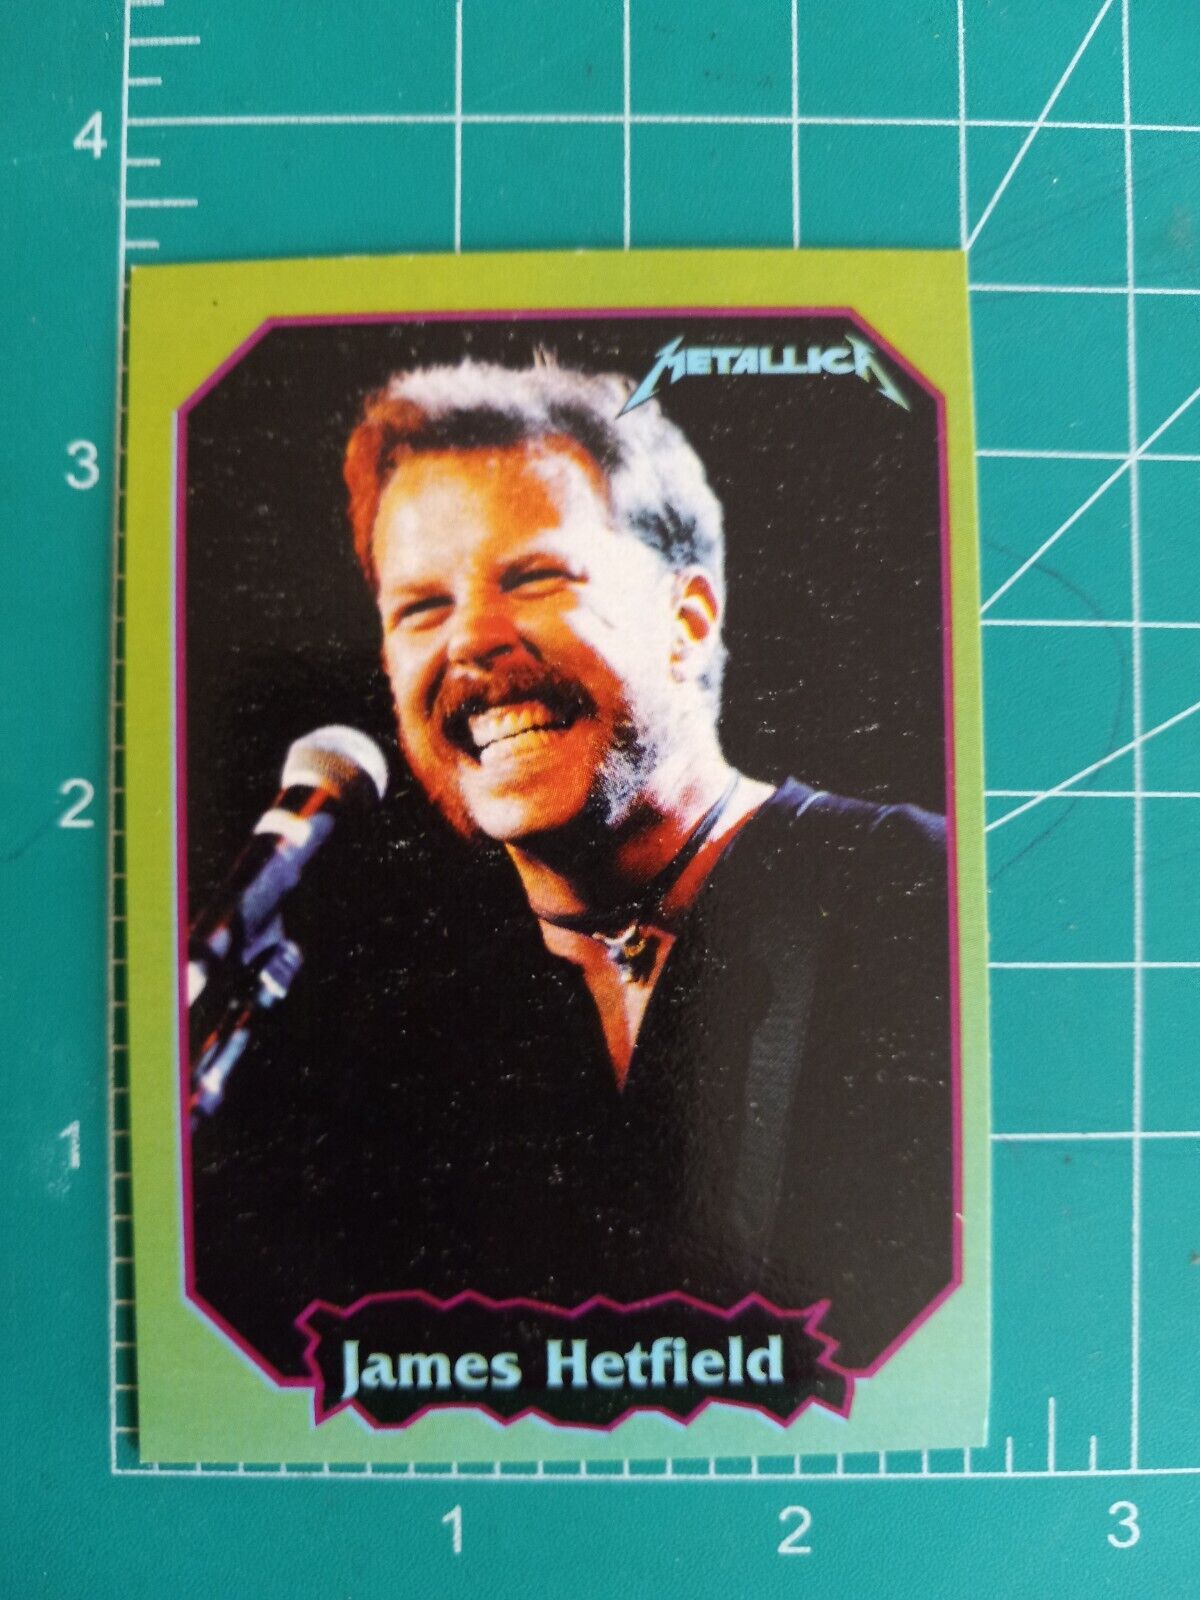 1997 Ultra Figus Argentina Rock Music Cards METALLICA JAMES HETFIELD 